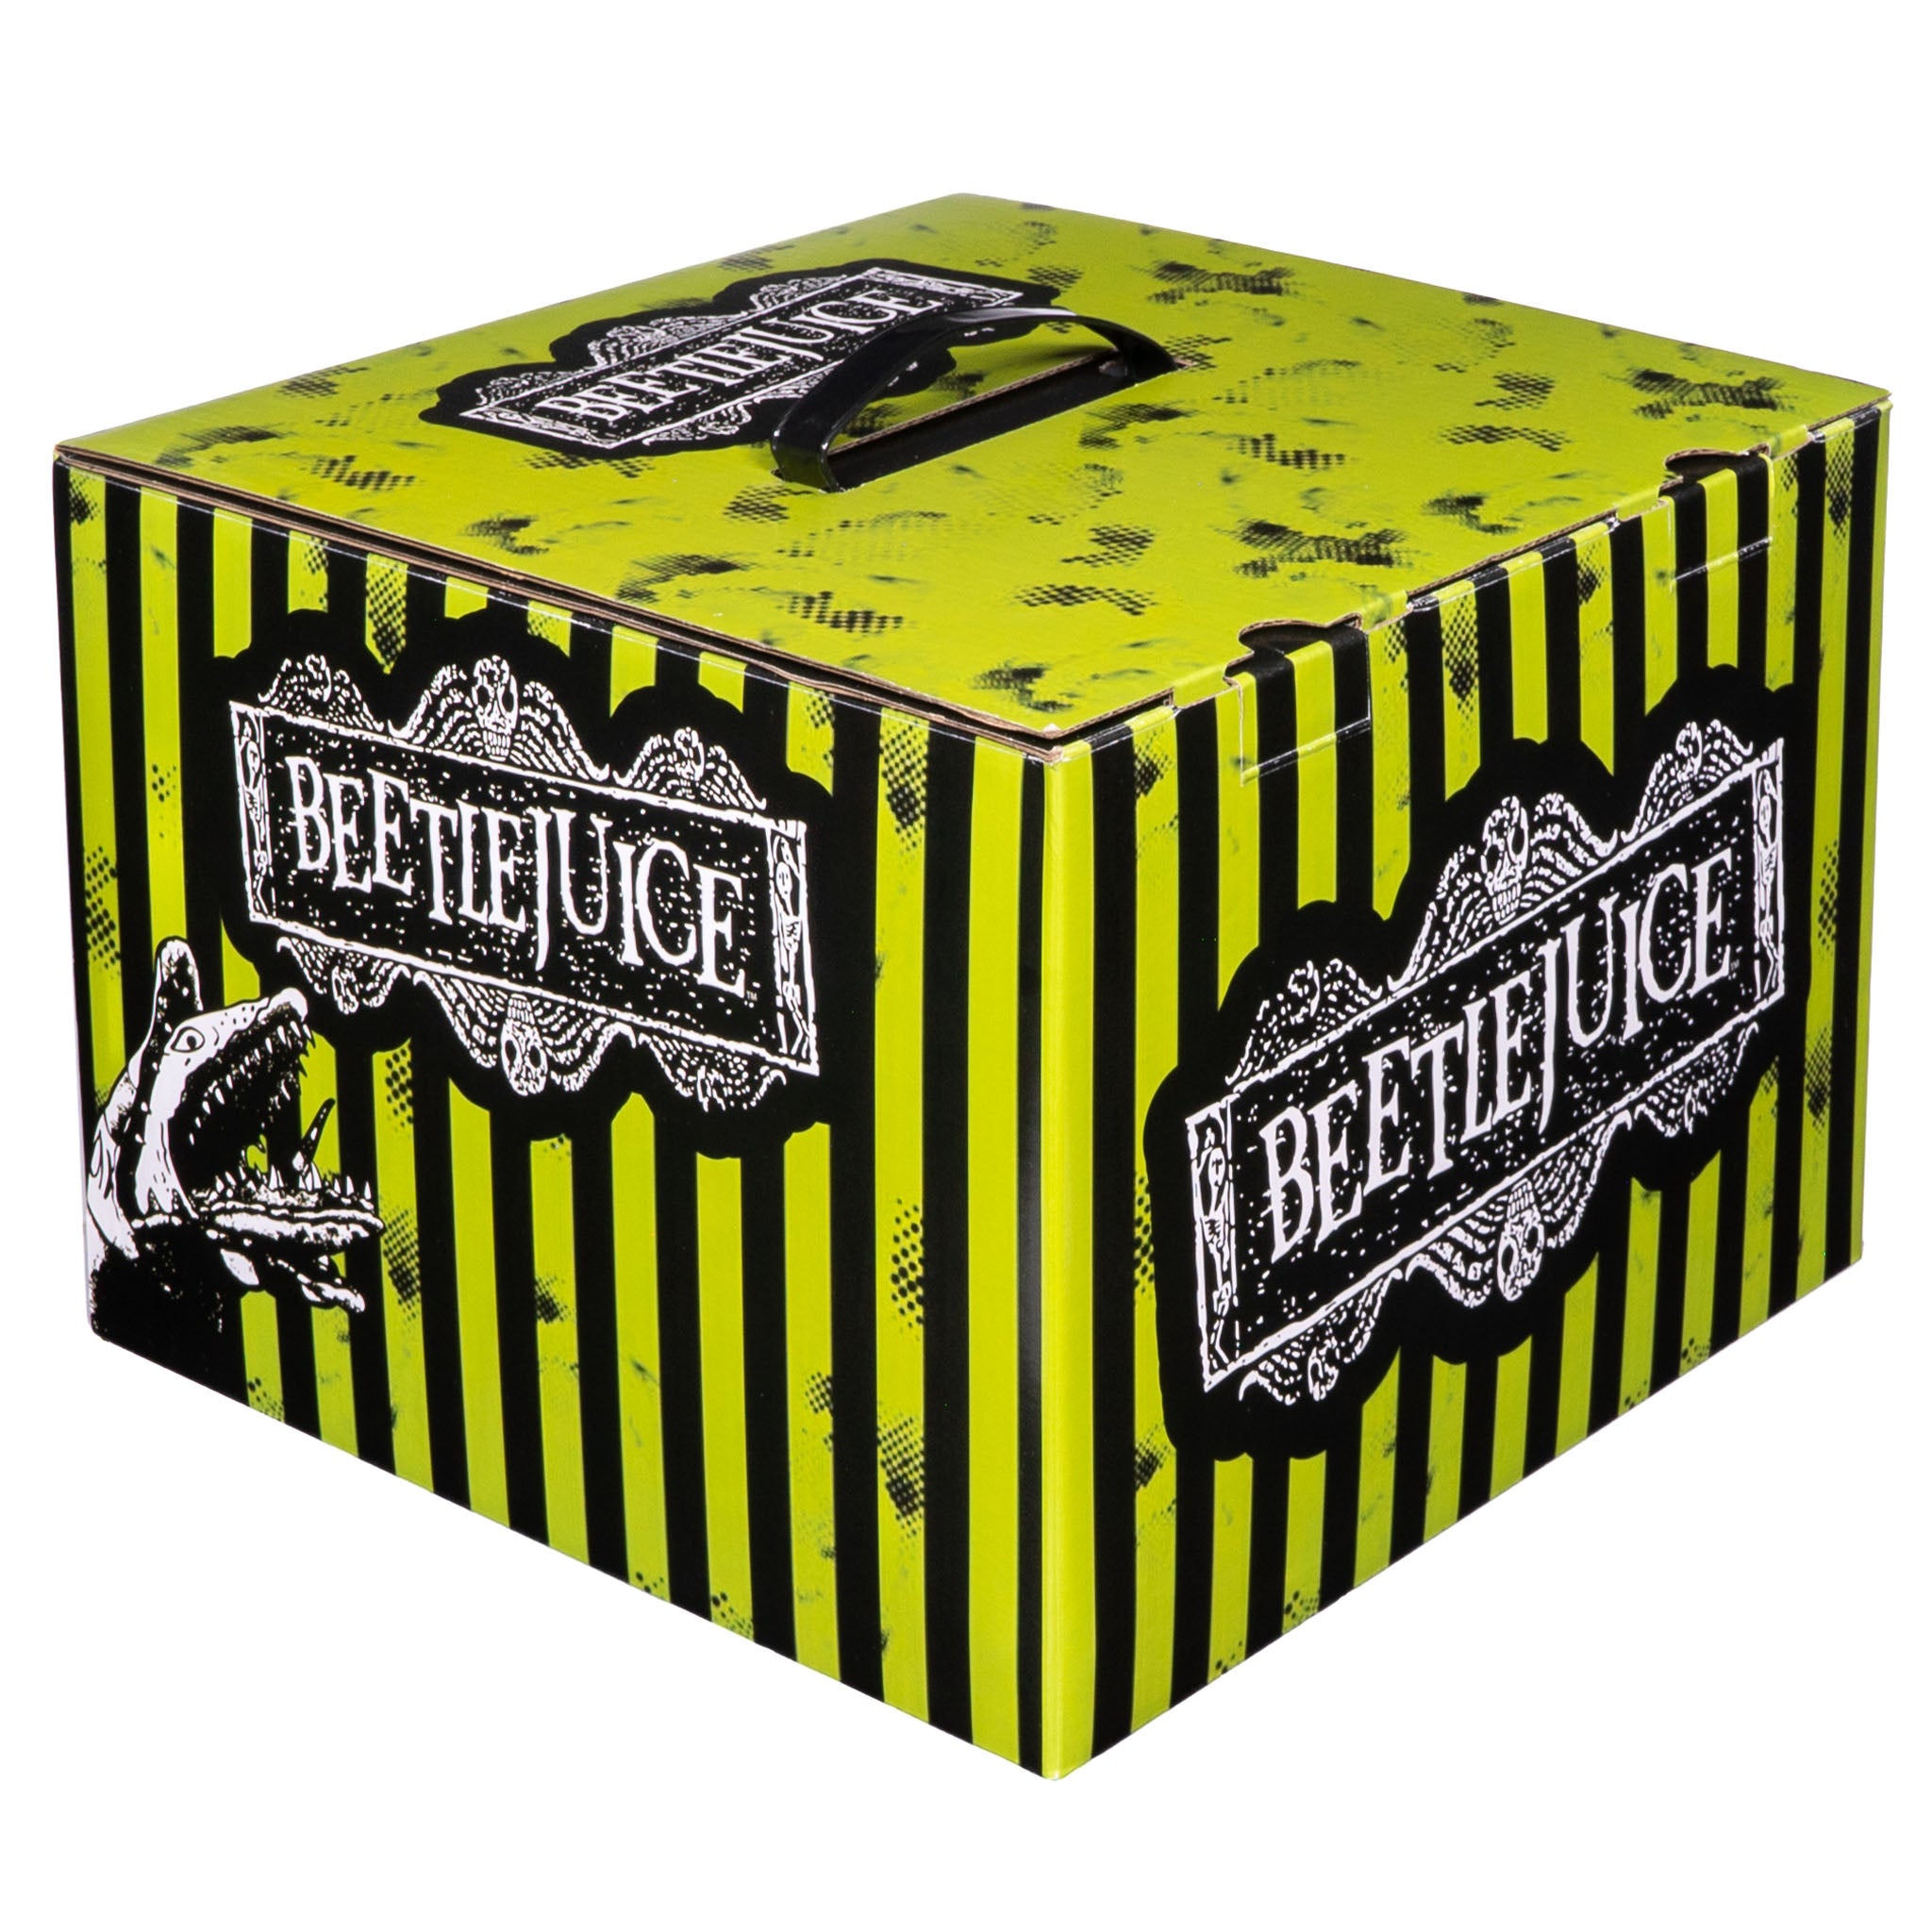 Beetlejuice Box